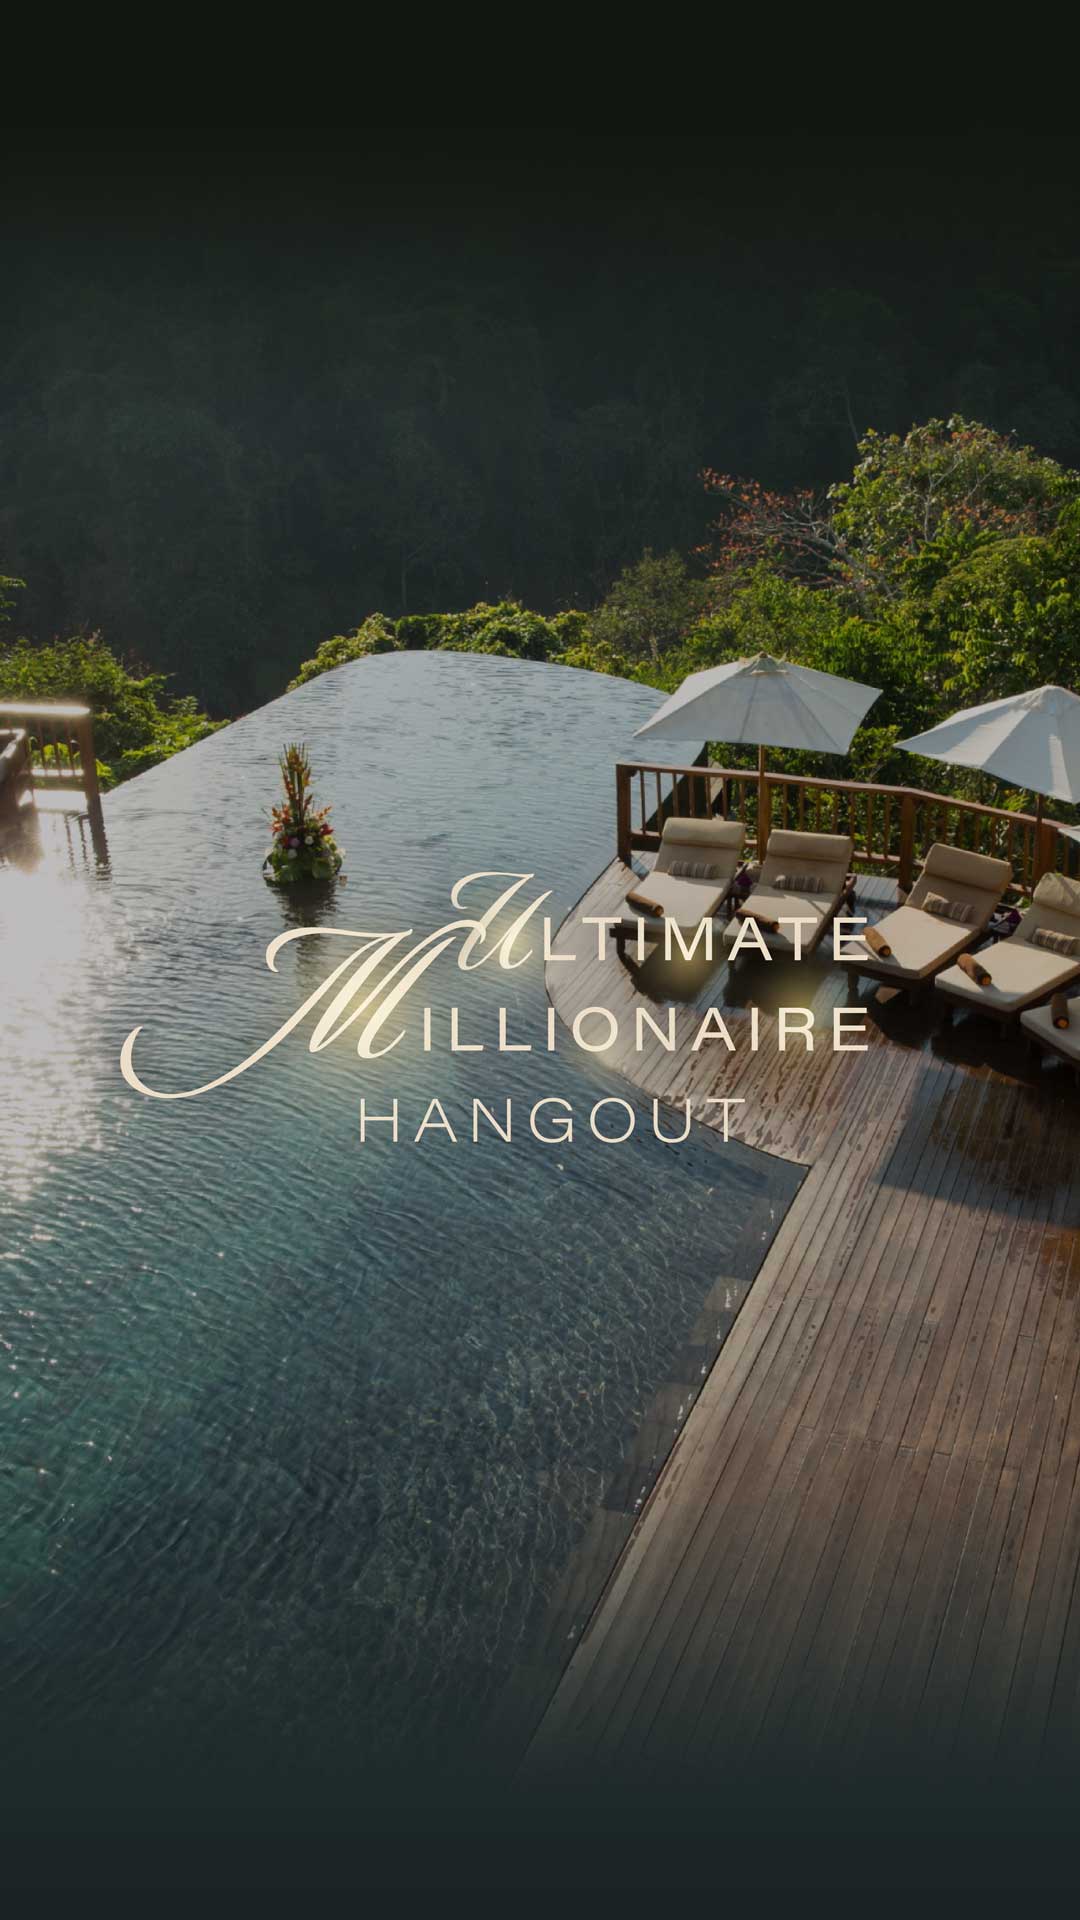 Bali All Inclusive Resort - Millionaire Hangout